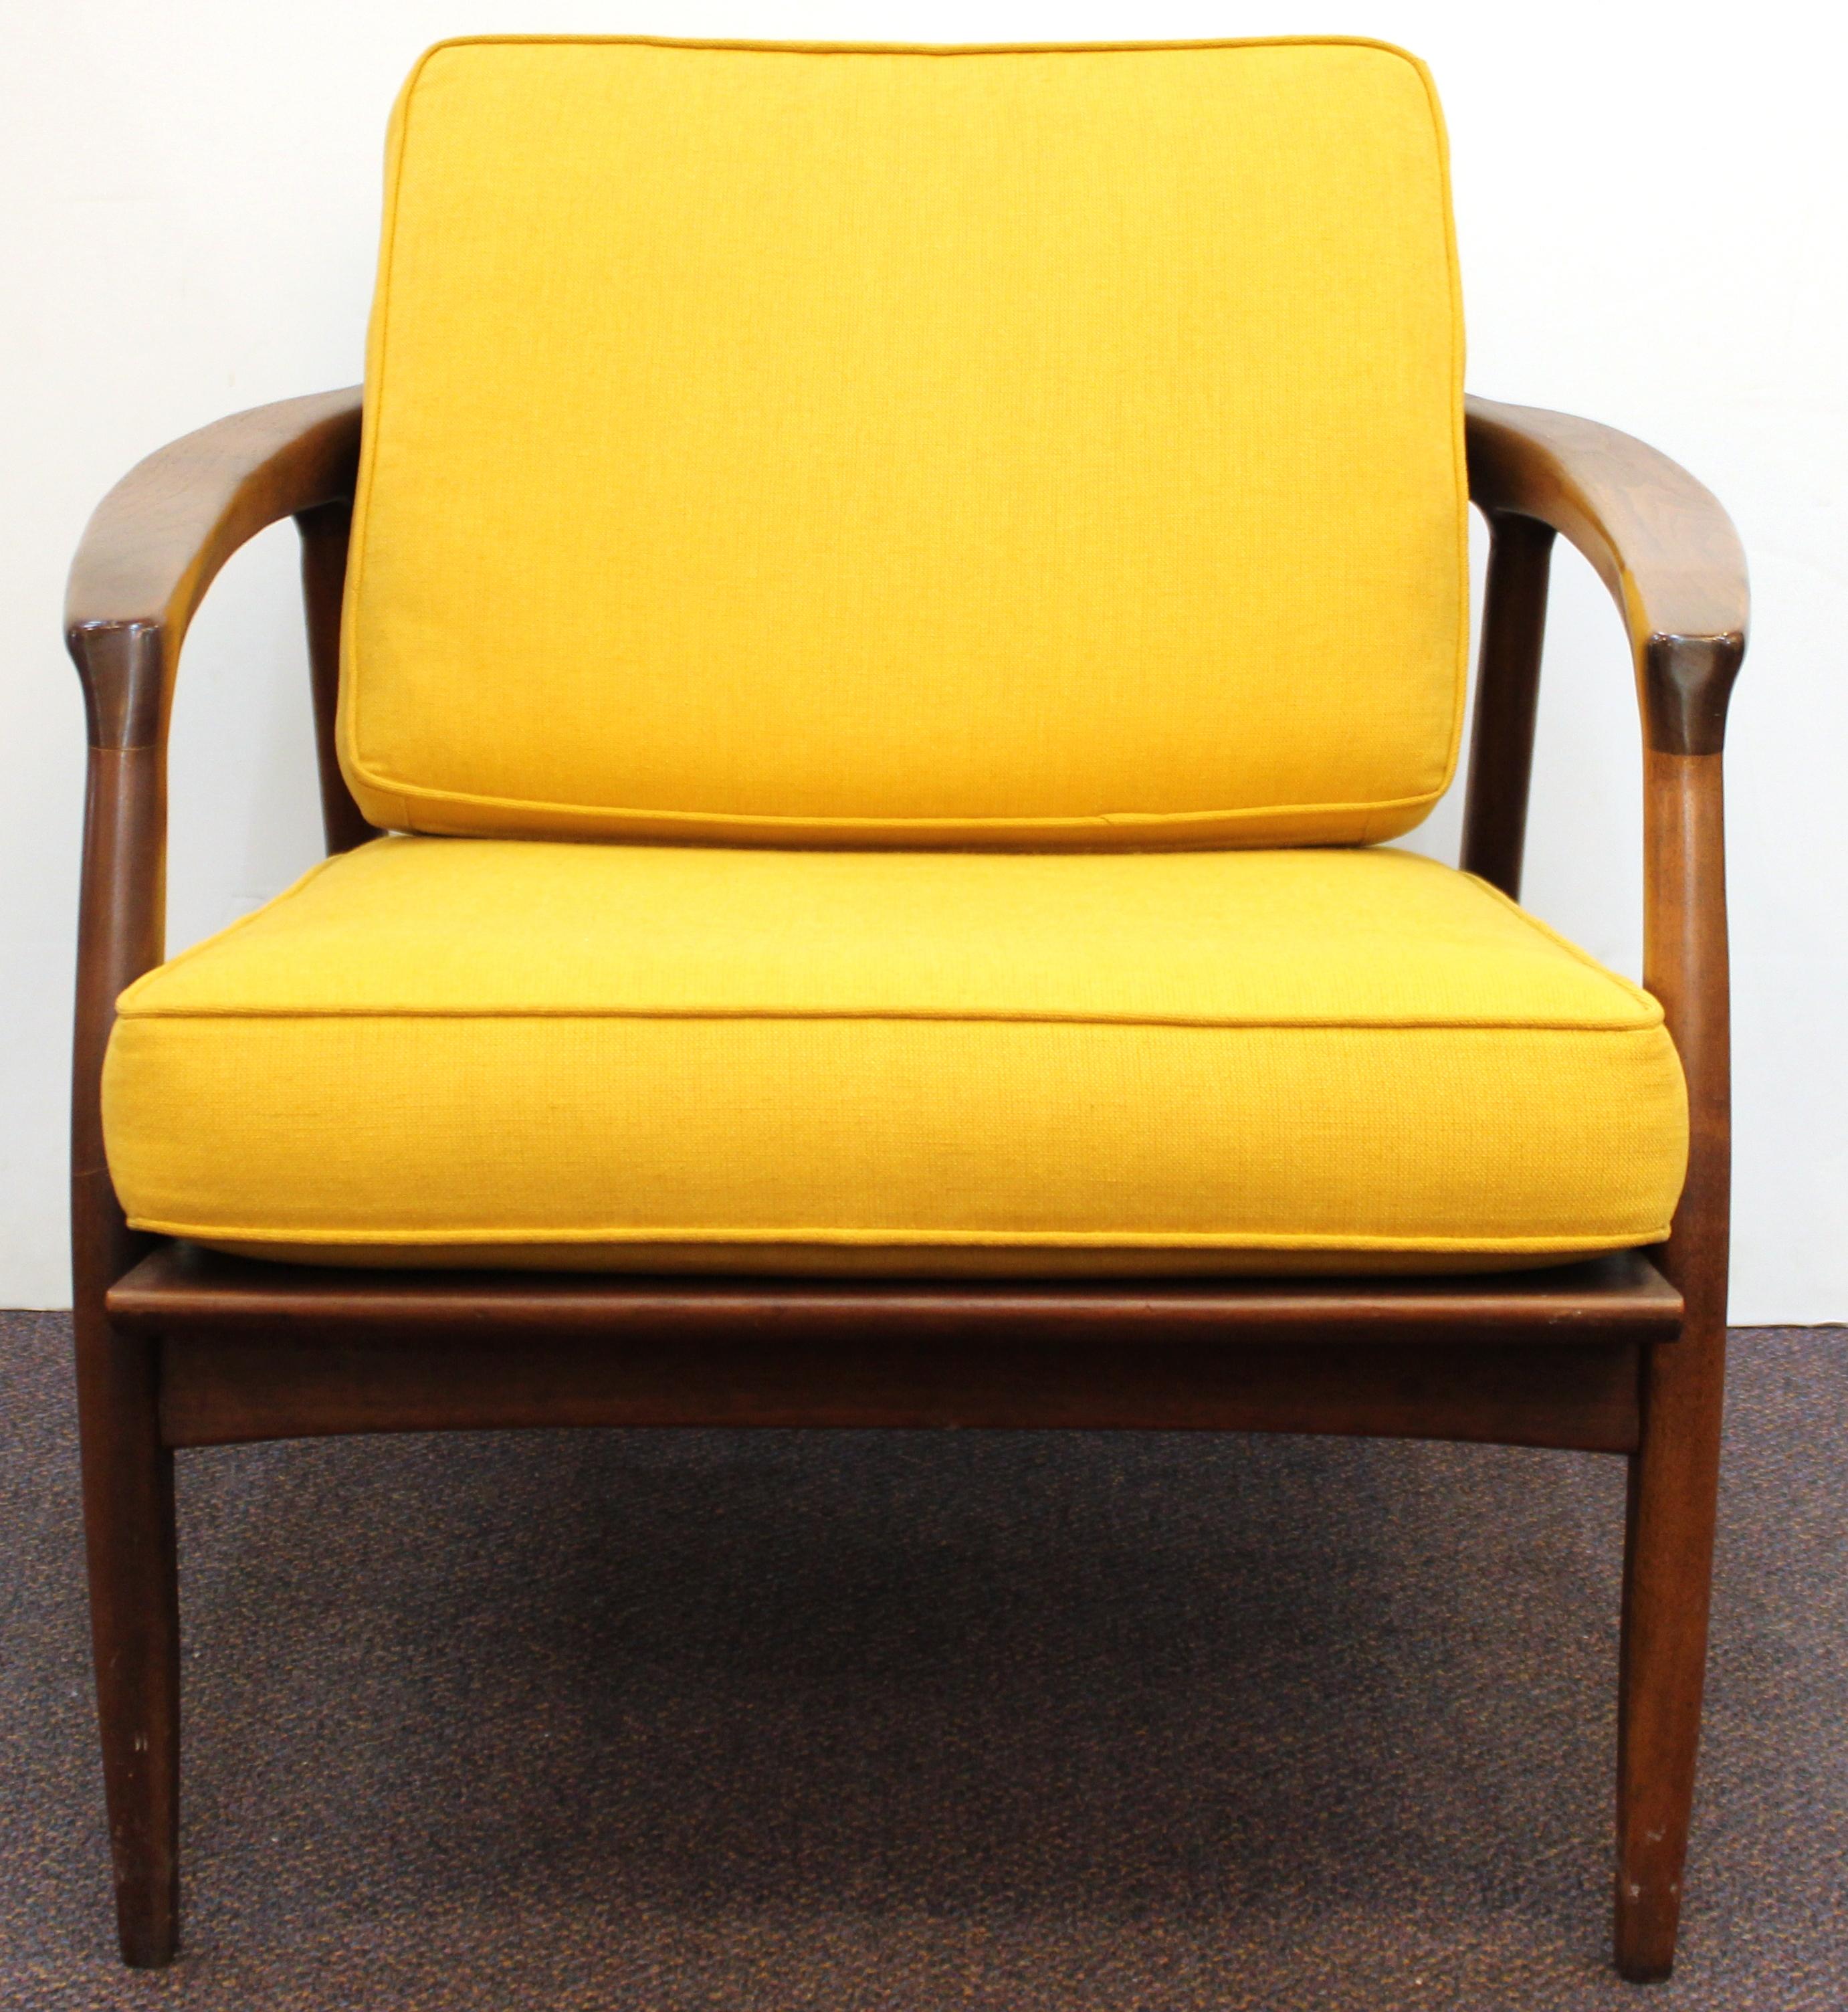 20th Century Milo Baughman for Thayer Coggin Mid-Century Modern Lounge Chairs